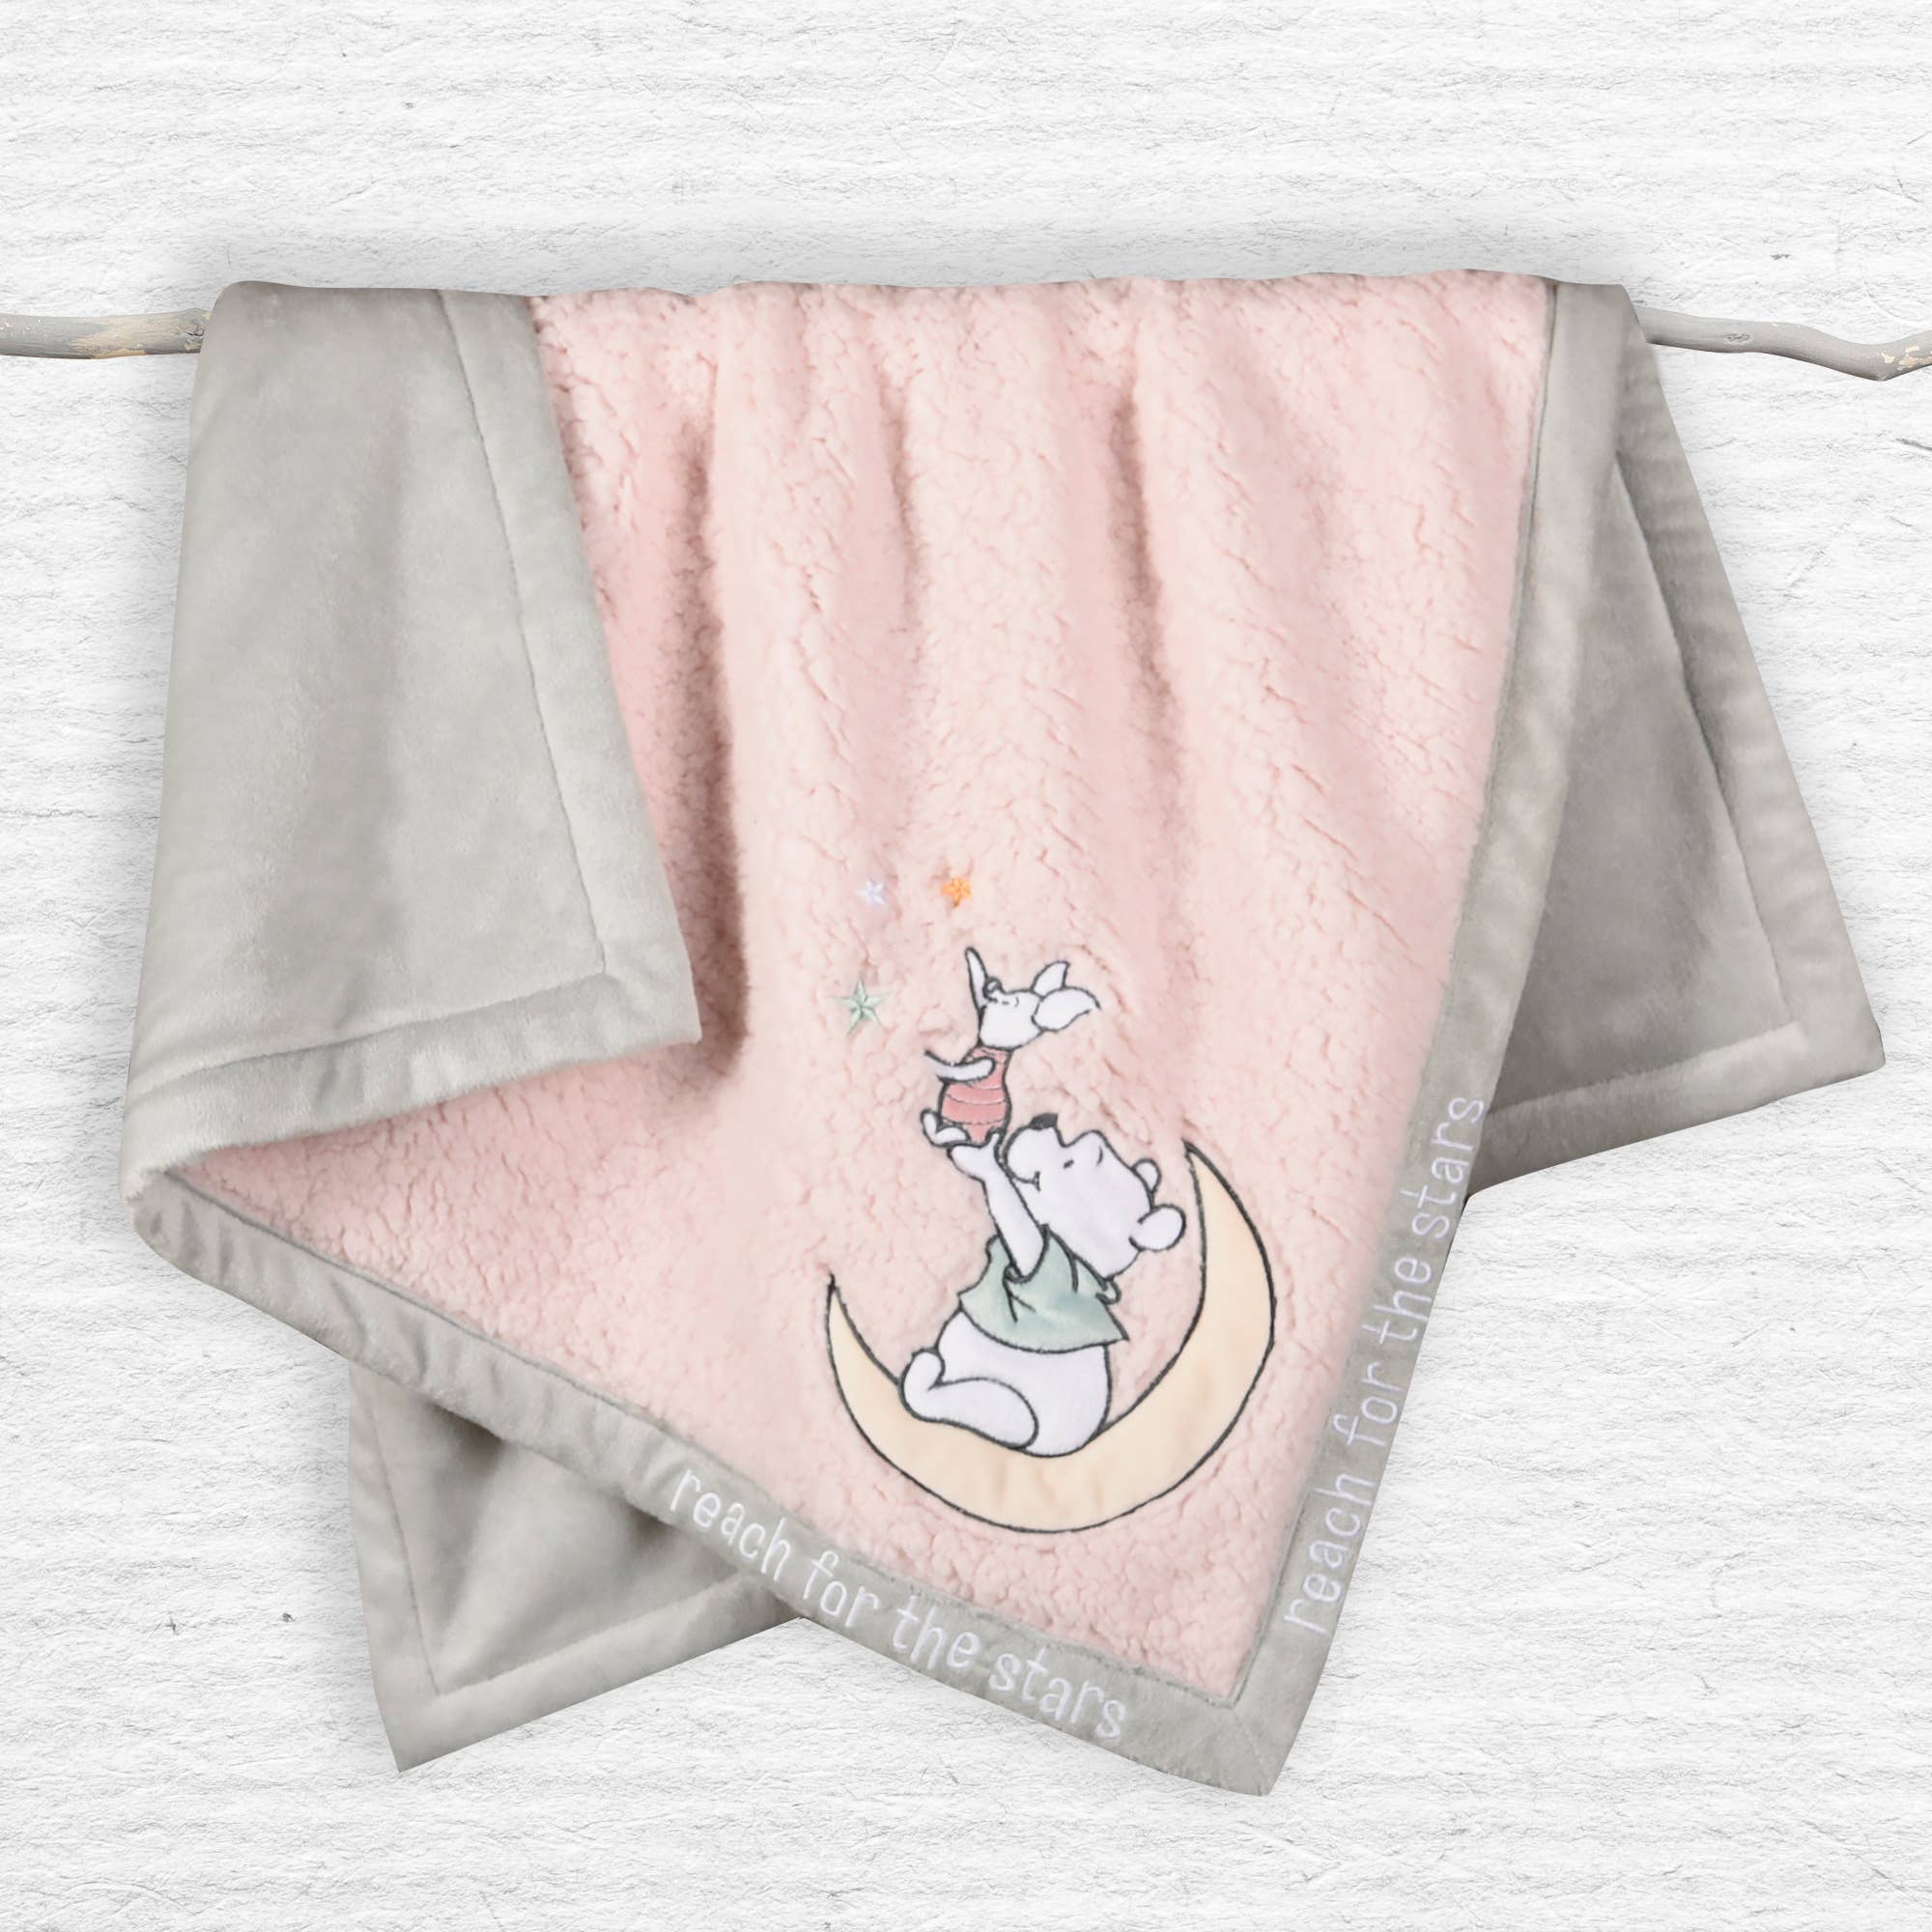 Cudlie Accessories Disney Baby Winnie The Pooh Hooded Towel with 5